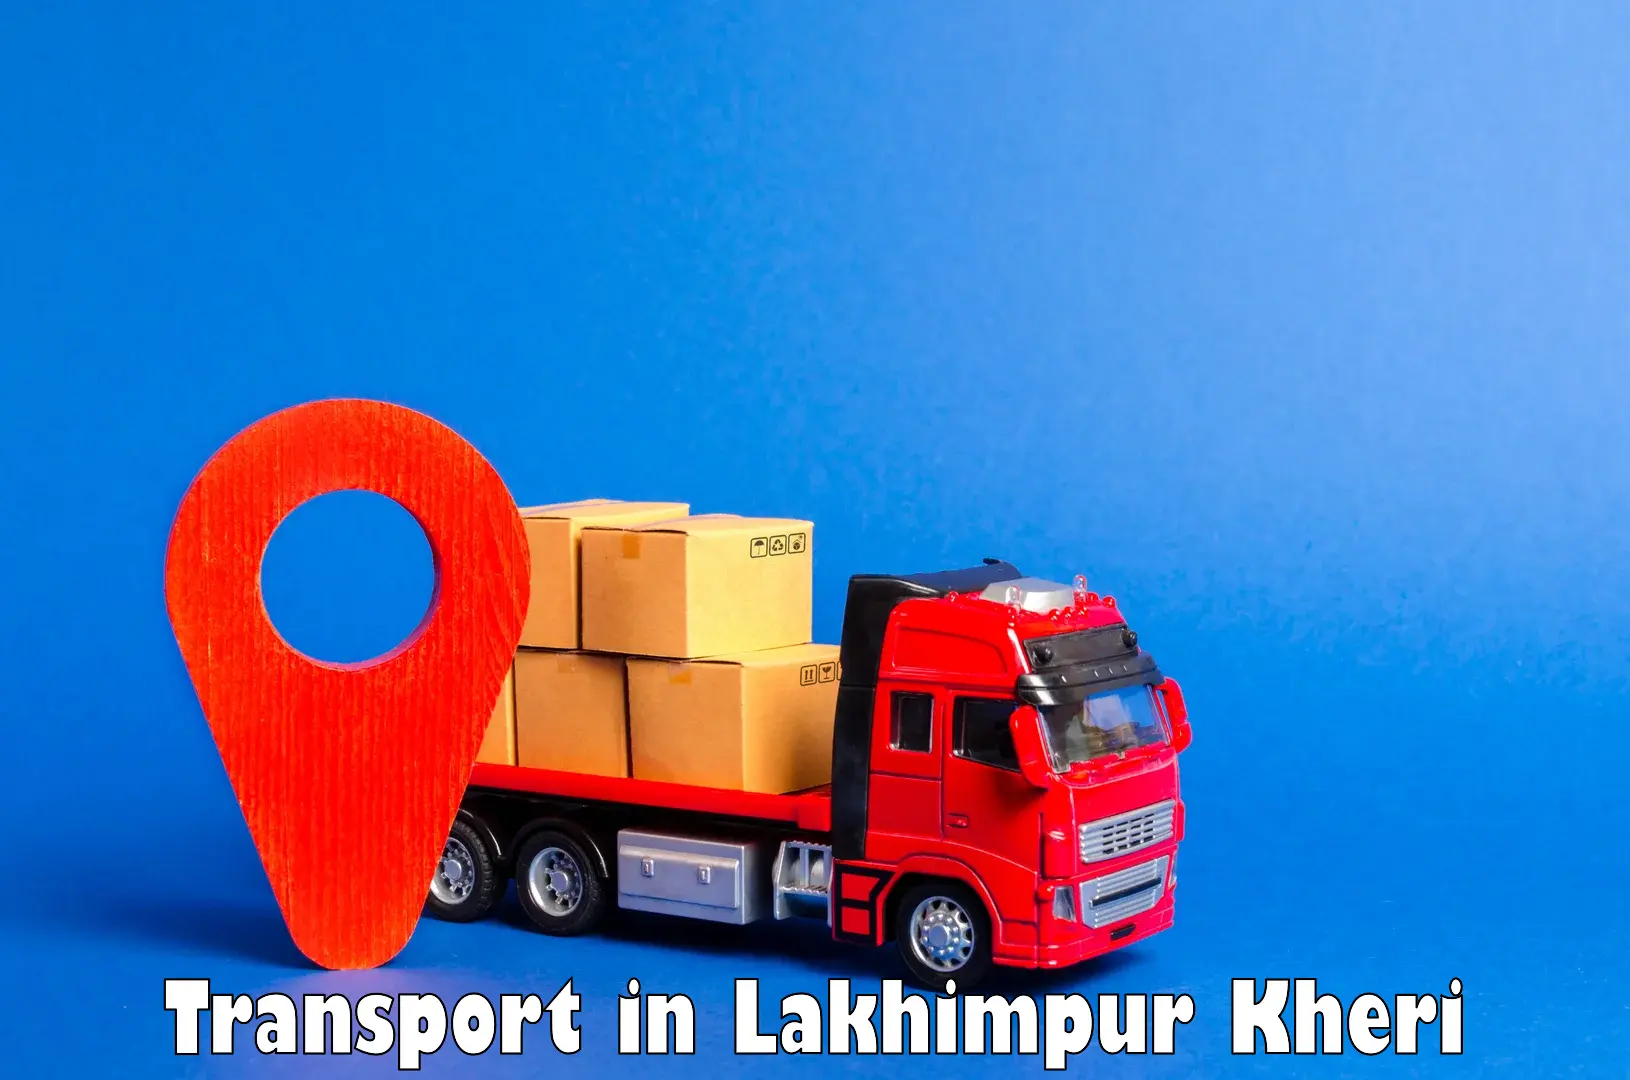 Daily parcel service transport in Lakhimpur Kheri